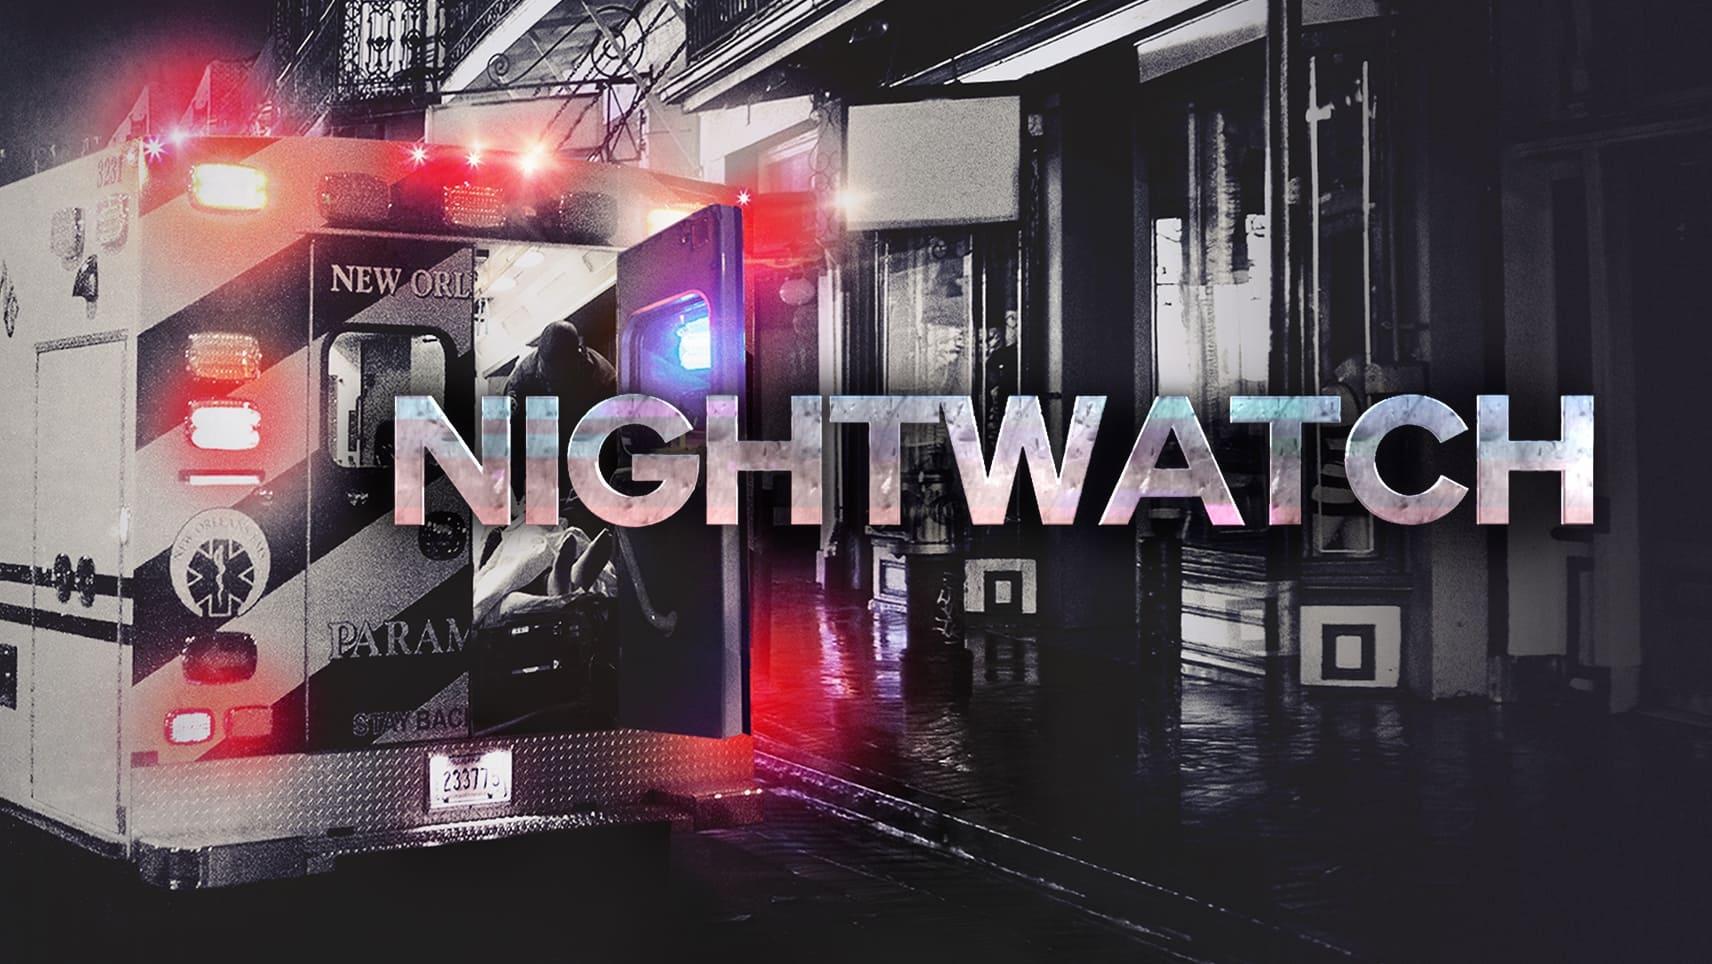 Nightwatch backdrop